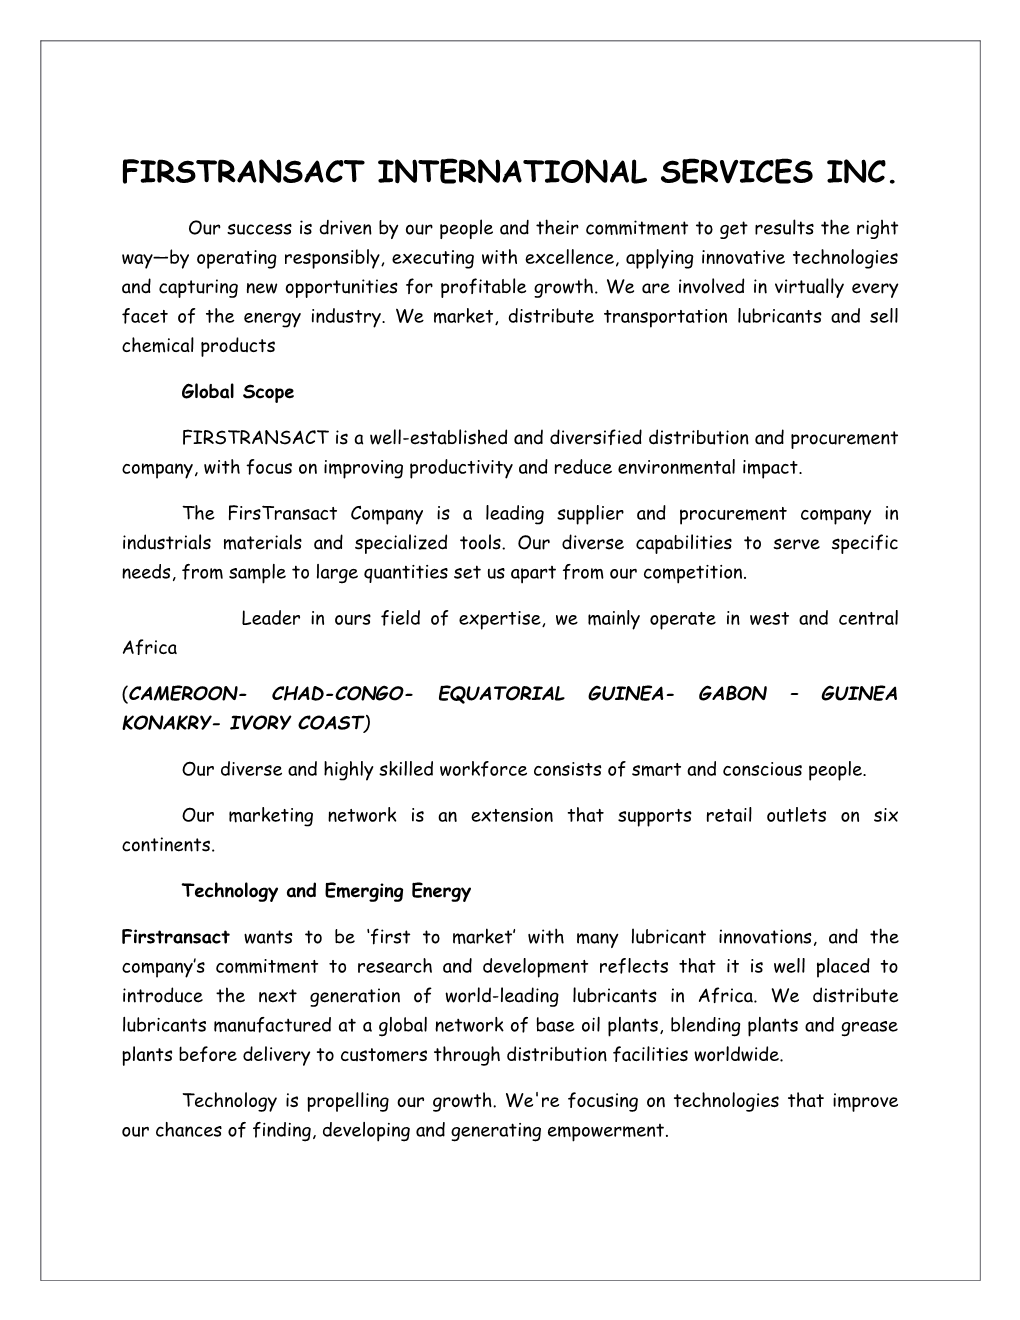 Firstransact International Services Inc